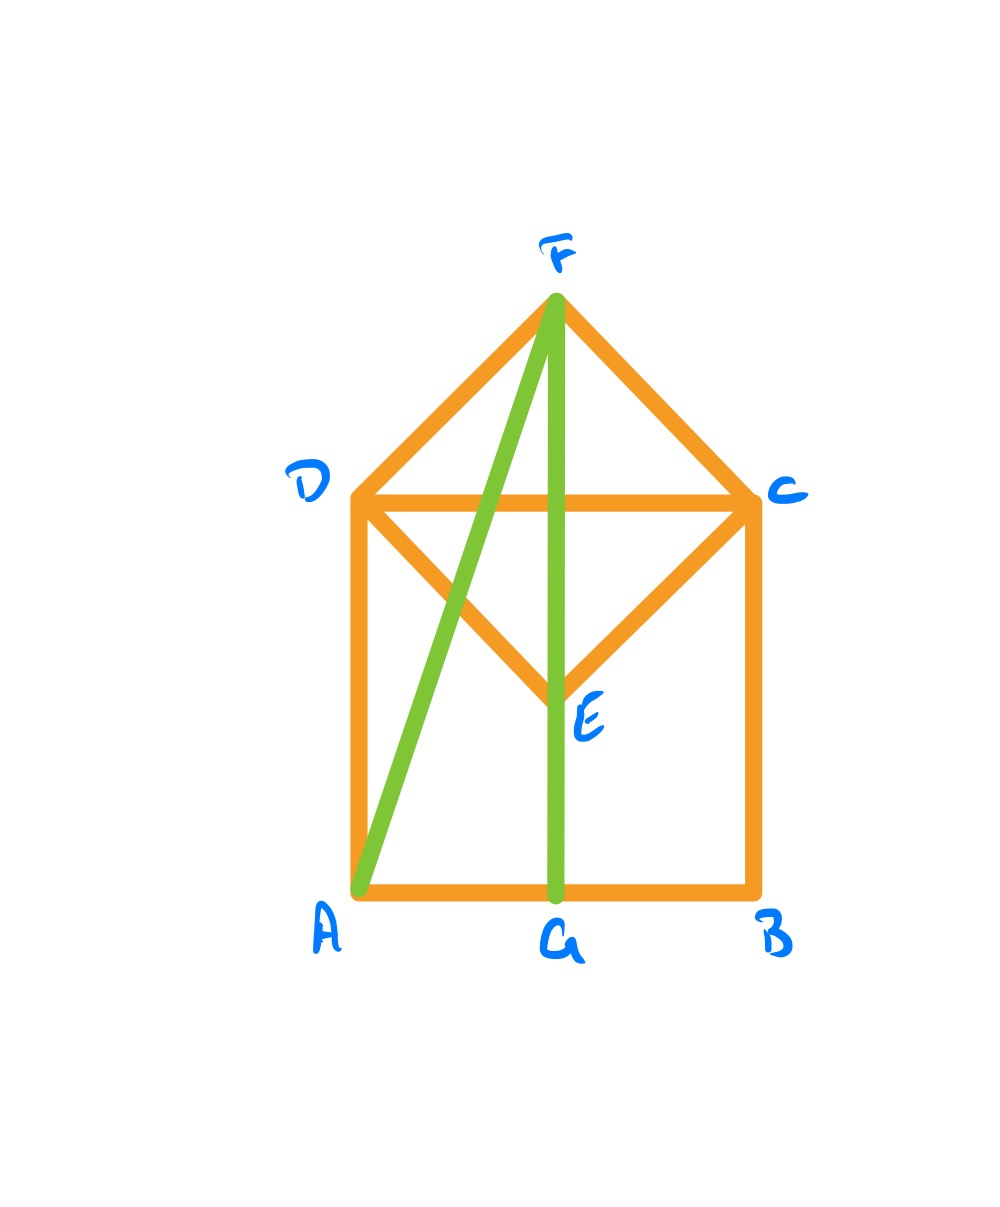 Five decreasing squares labelled